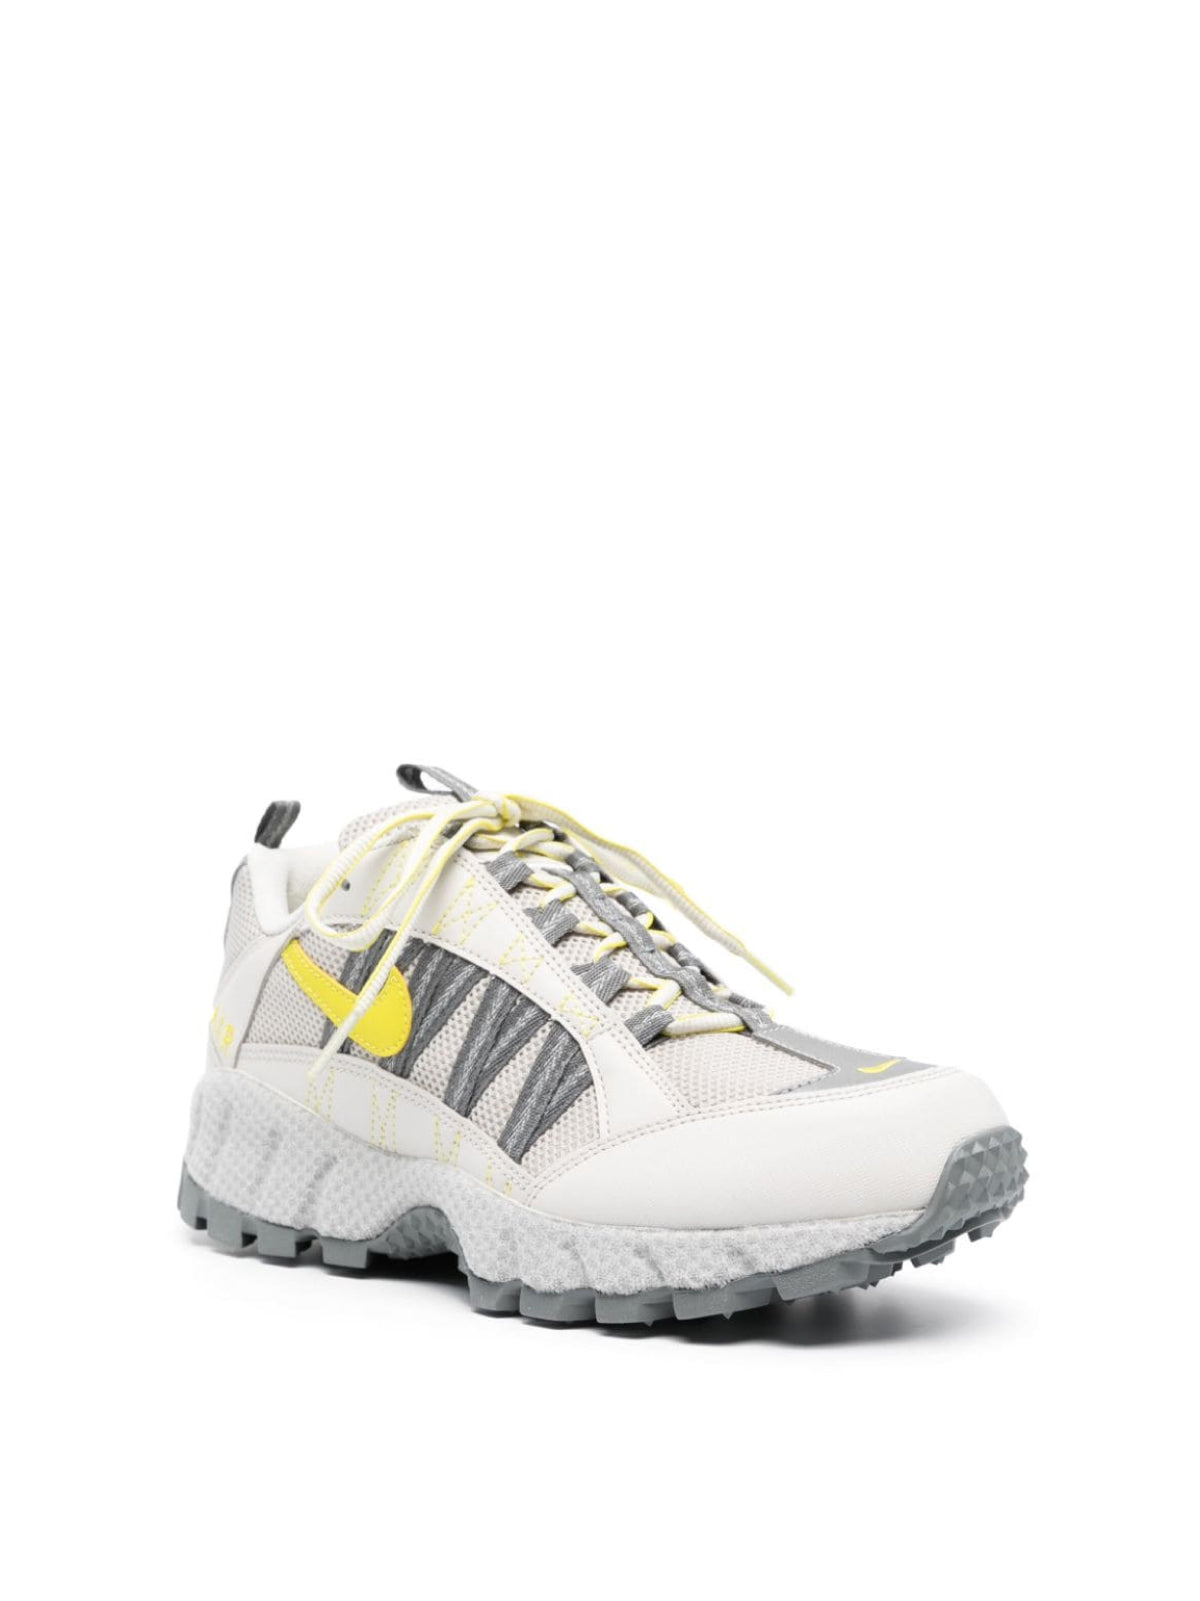 Nike-OUTLET-SALE-Air Humara Light Bone Sneakers-ARCHIVIST